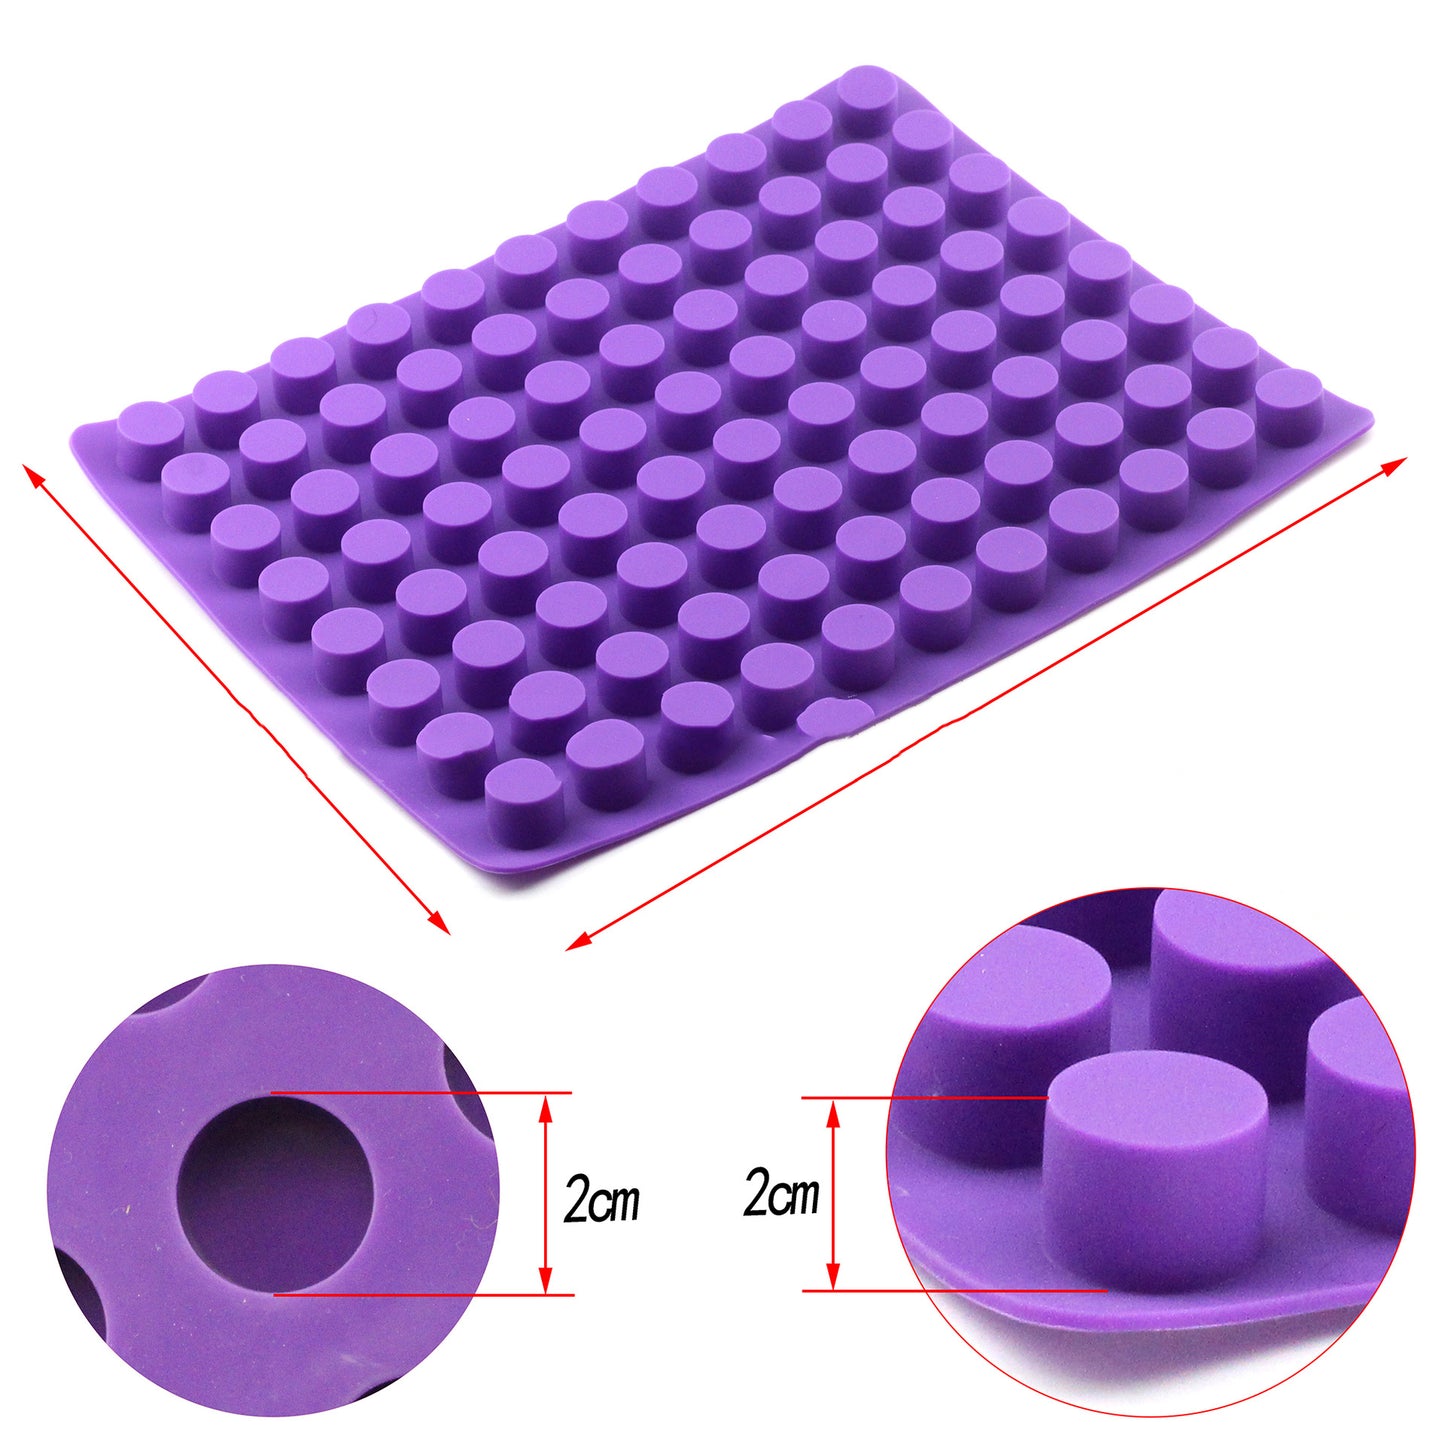 88-hole cylindrical silicone ice tray mold